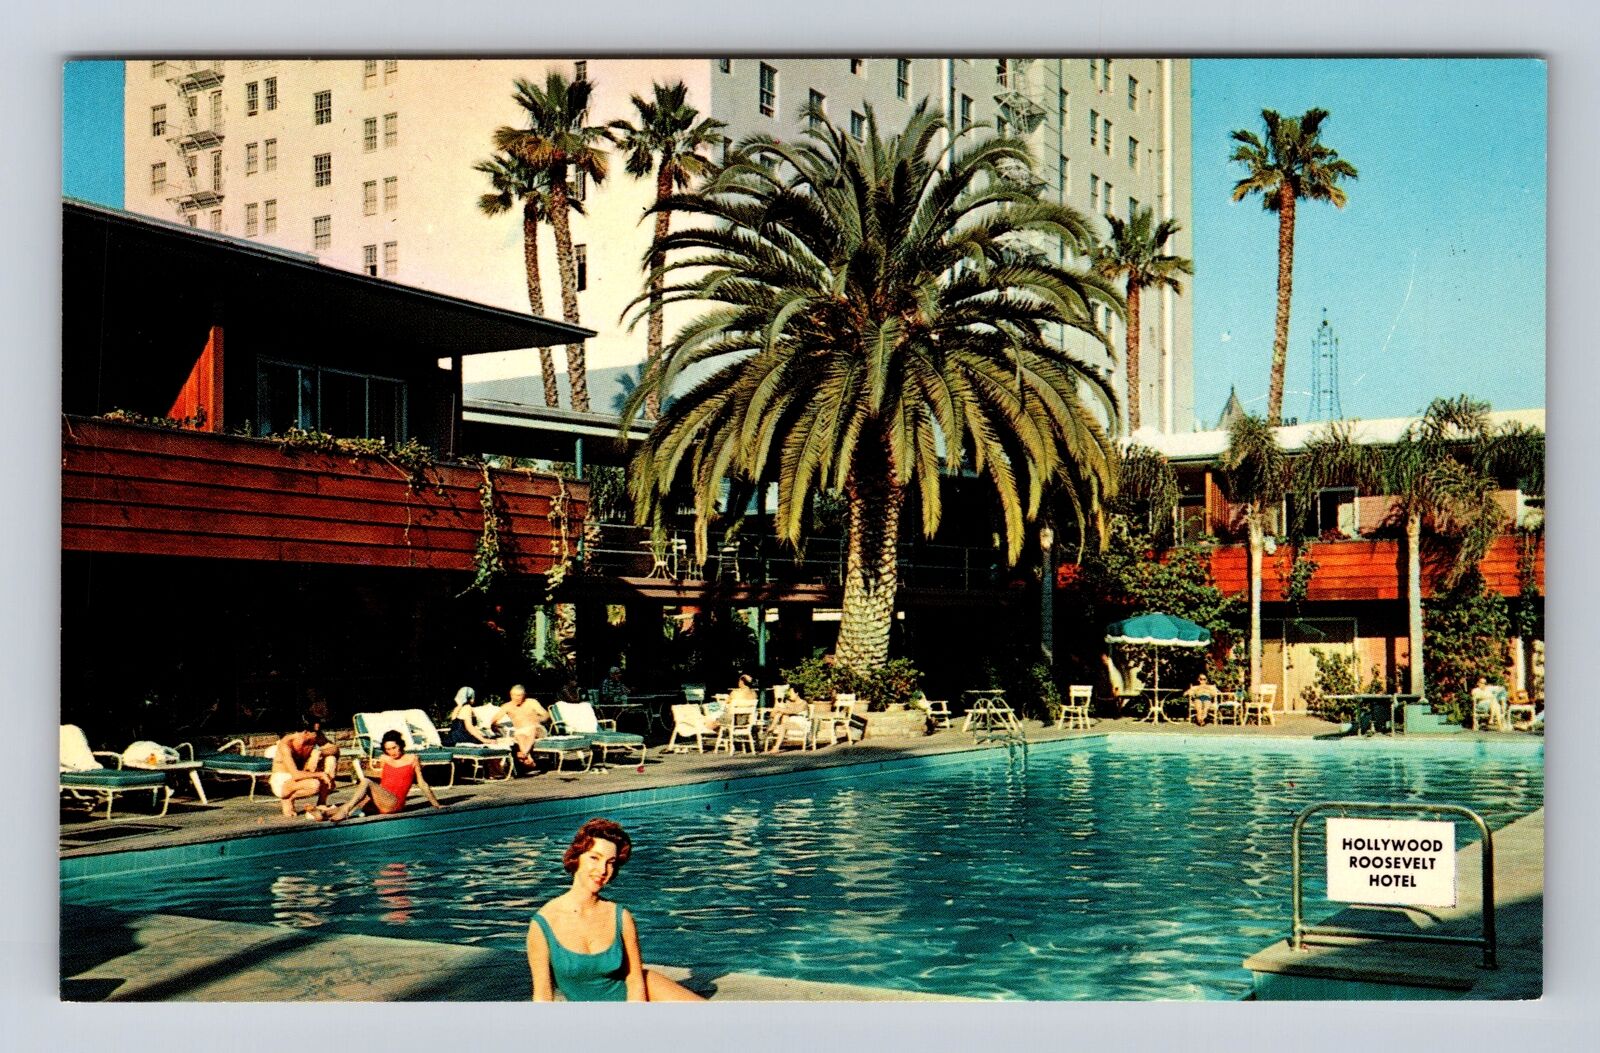 Hollywood CA-California, Hollywood Roosevelt Hotel, Advertising Vintage Postcard